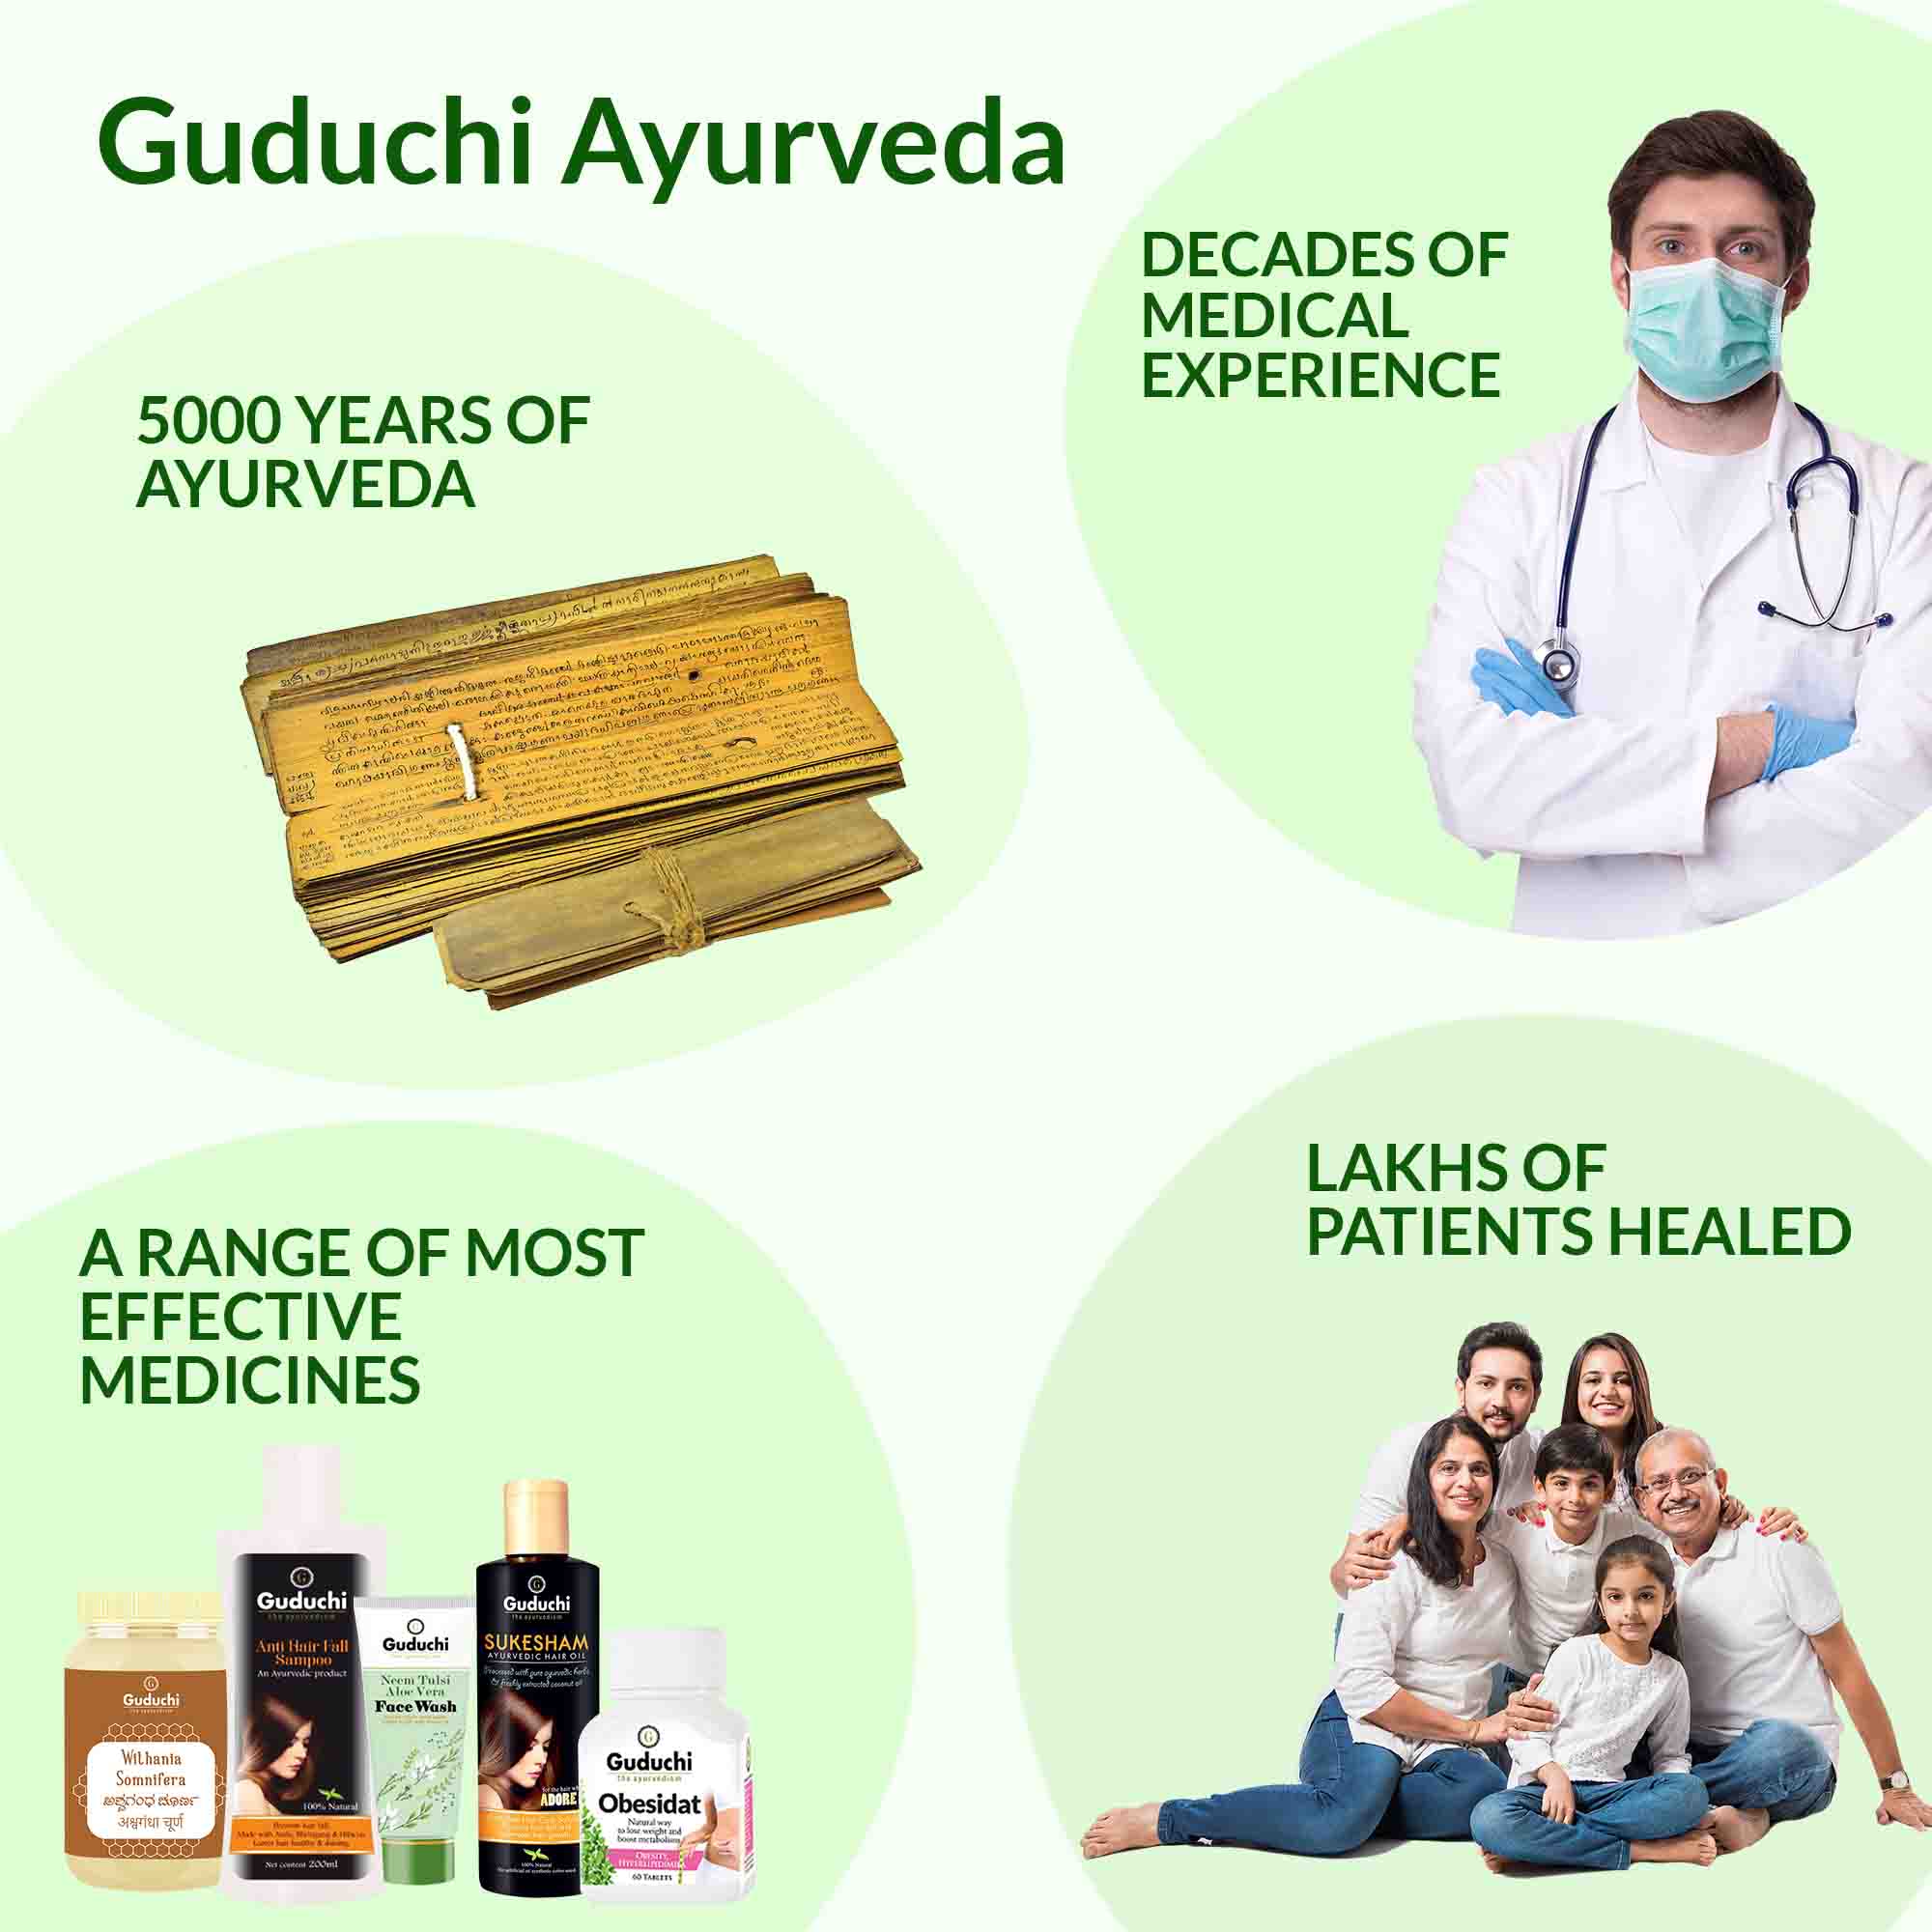 purity-and-goodness-of-guduchi-ayurvedism